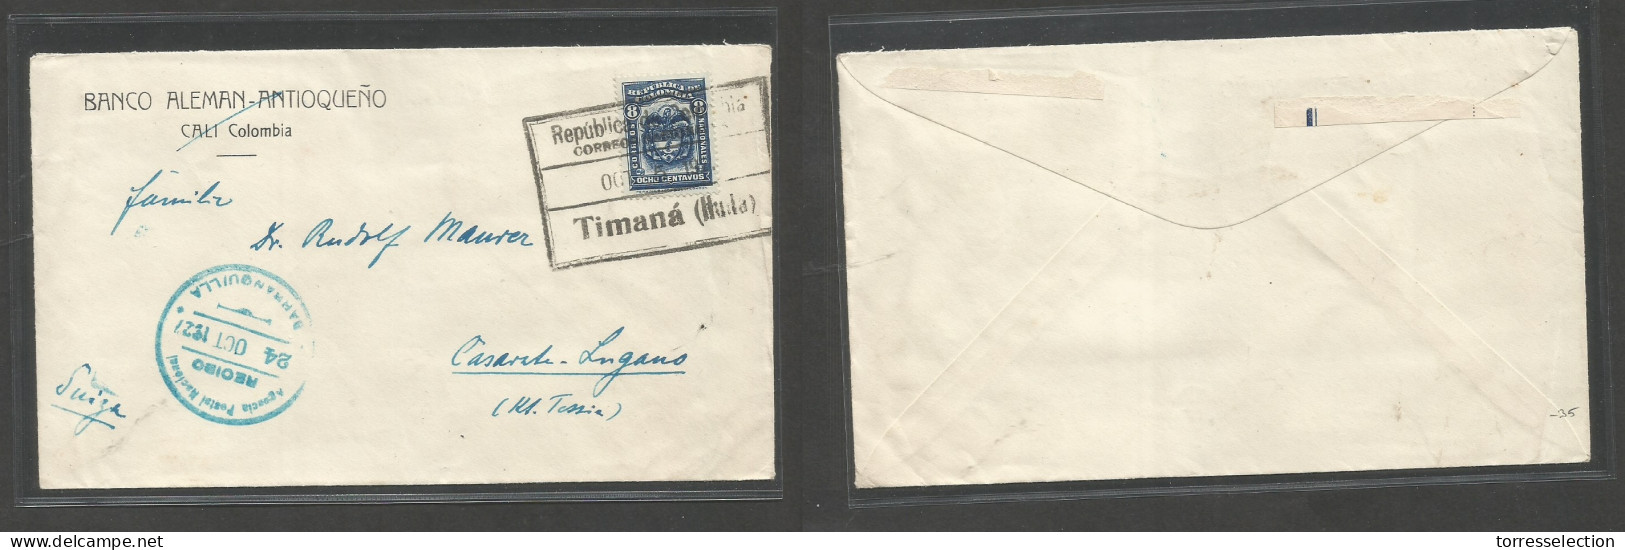 COLOMBIA. 1927 (5 Oct) Timana, Huda - Switzerland, Lugano Via Barranquilla. Fkd Comercial Envelope. Fine Town Usage. SAL - Colombie